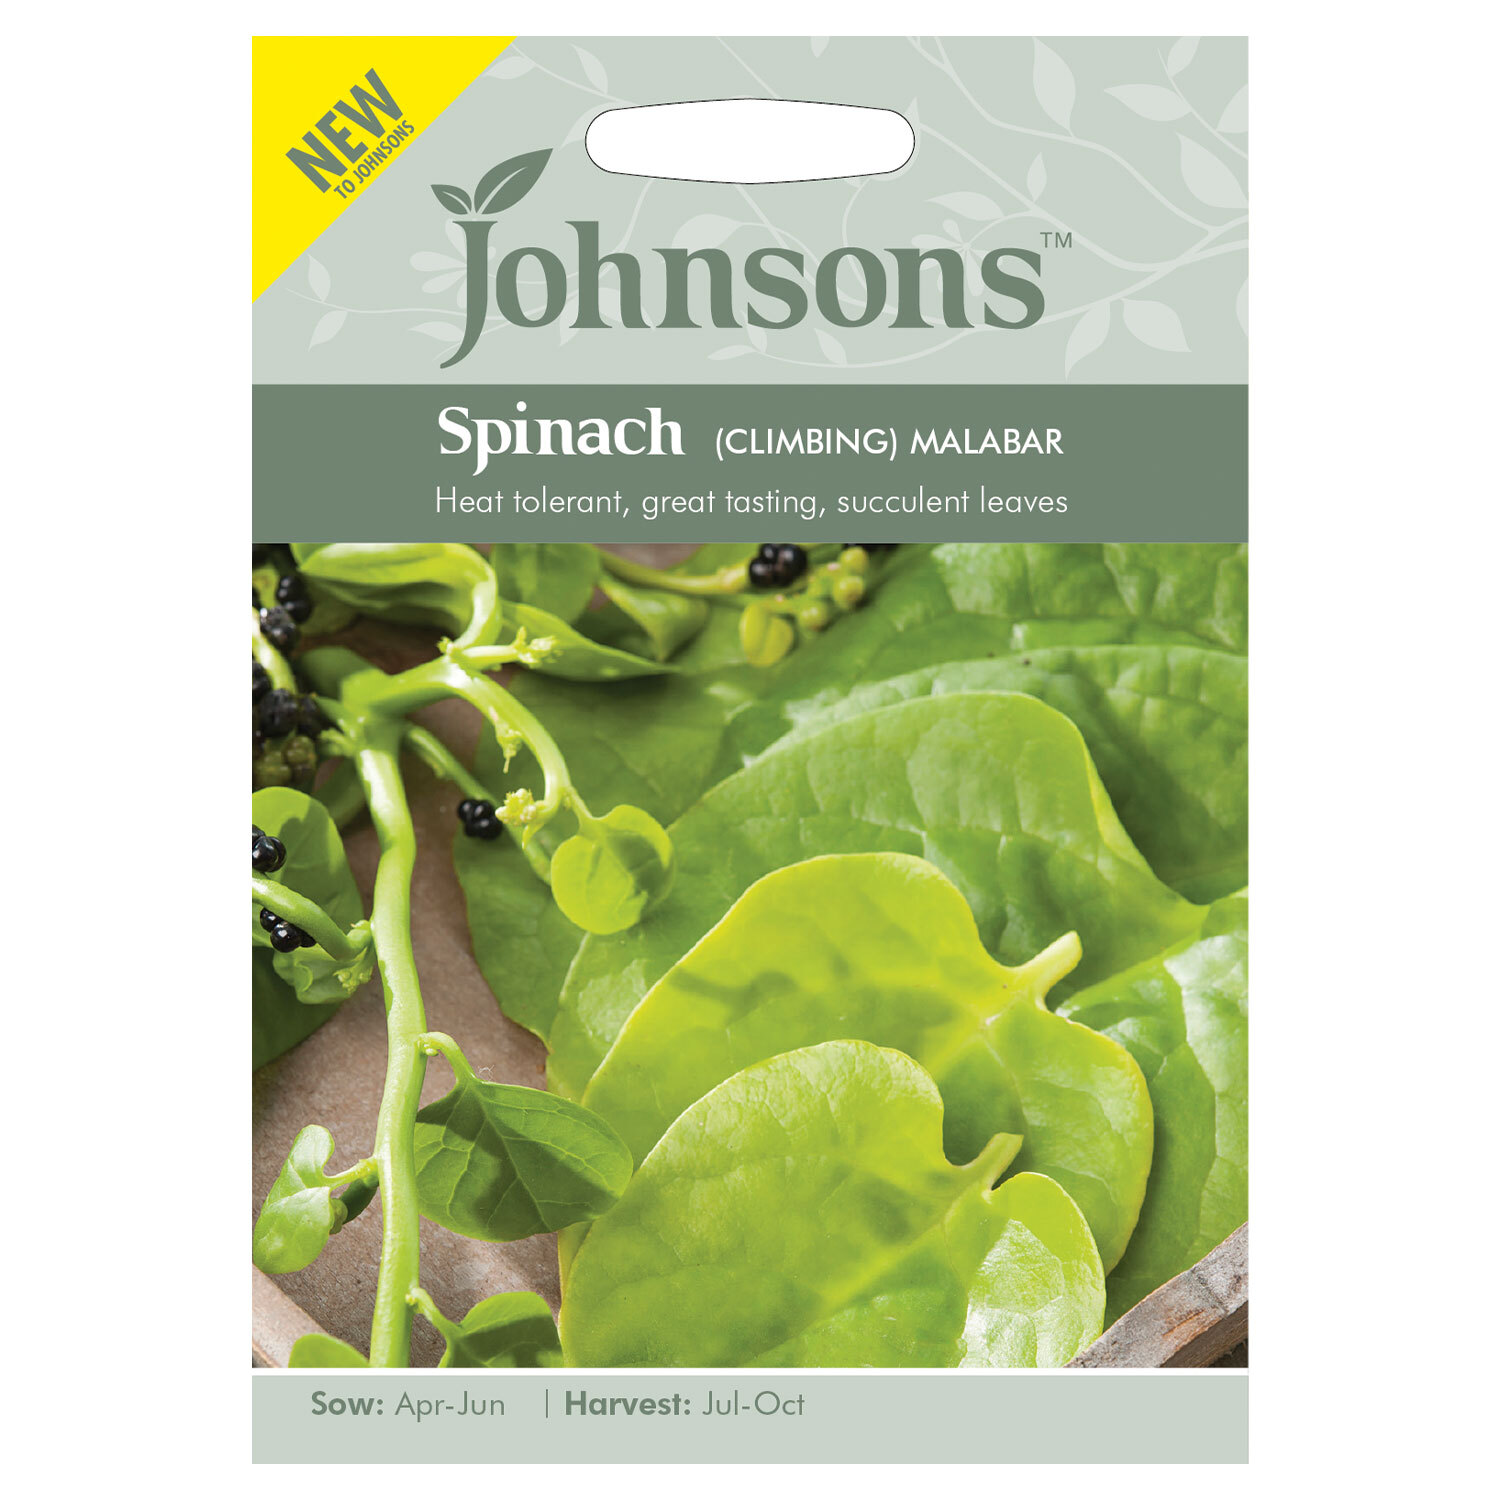 Johnsons Spinach Climbing Malabar Vegetable Seeds Image 2